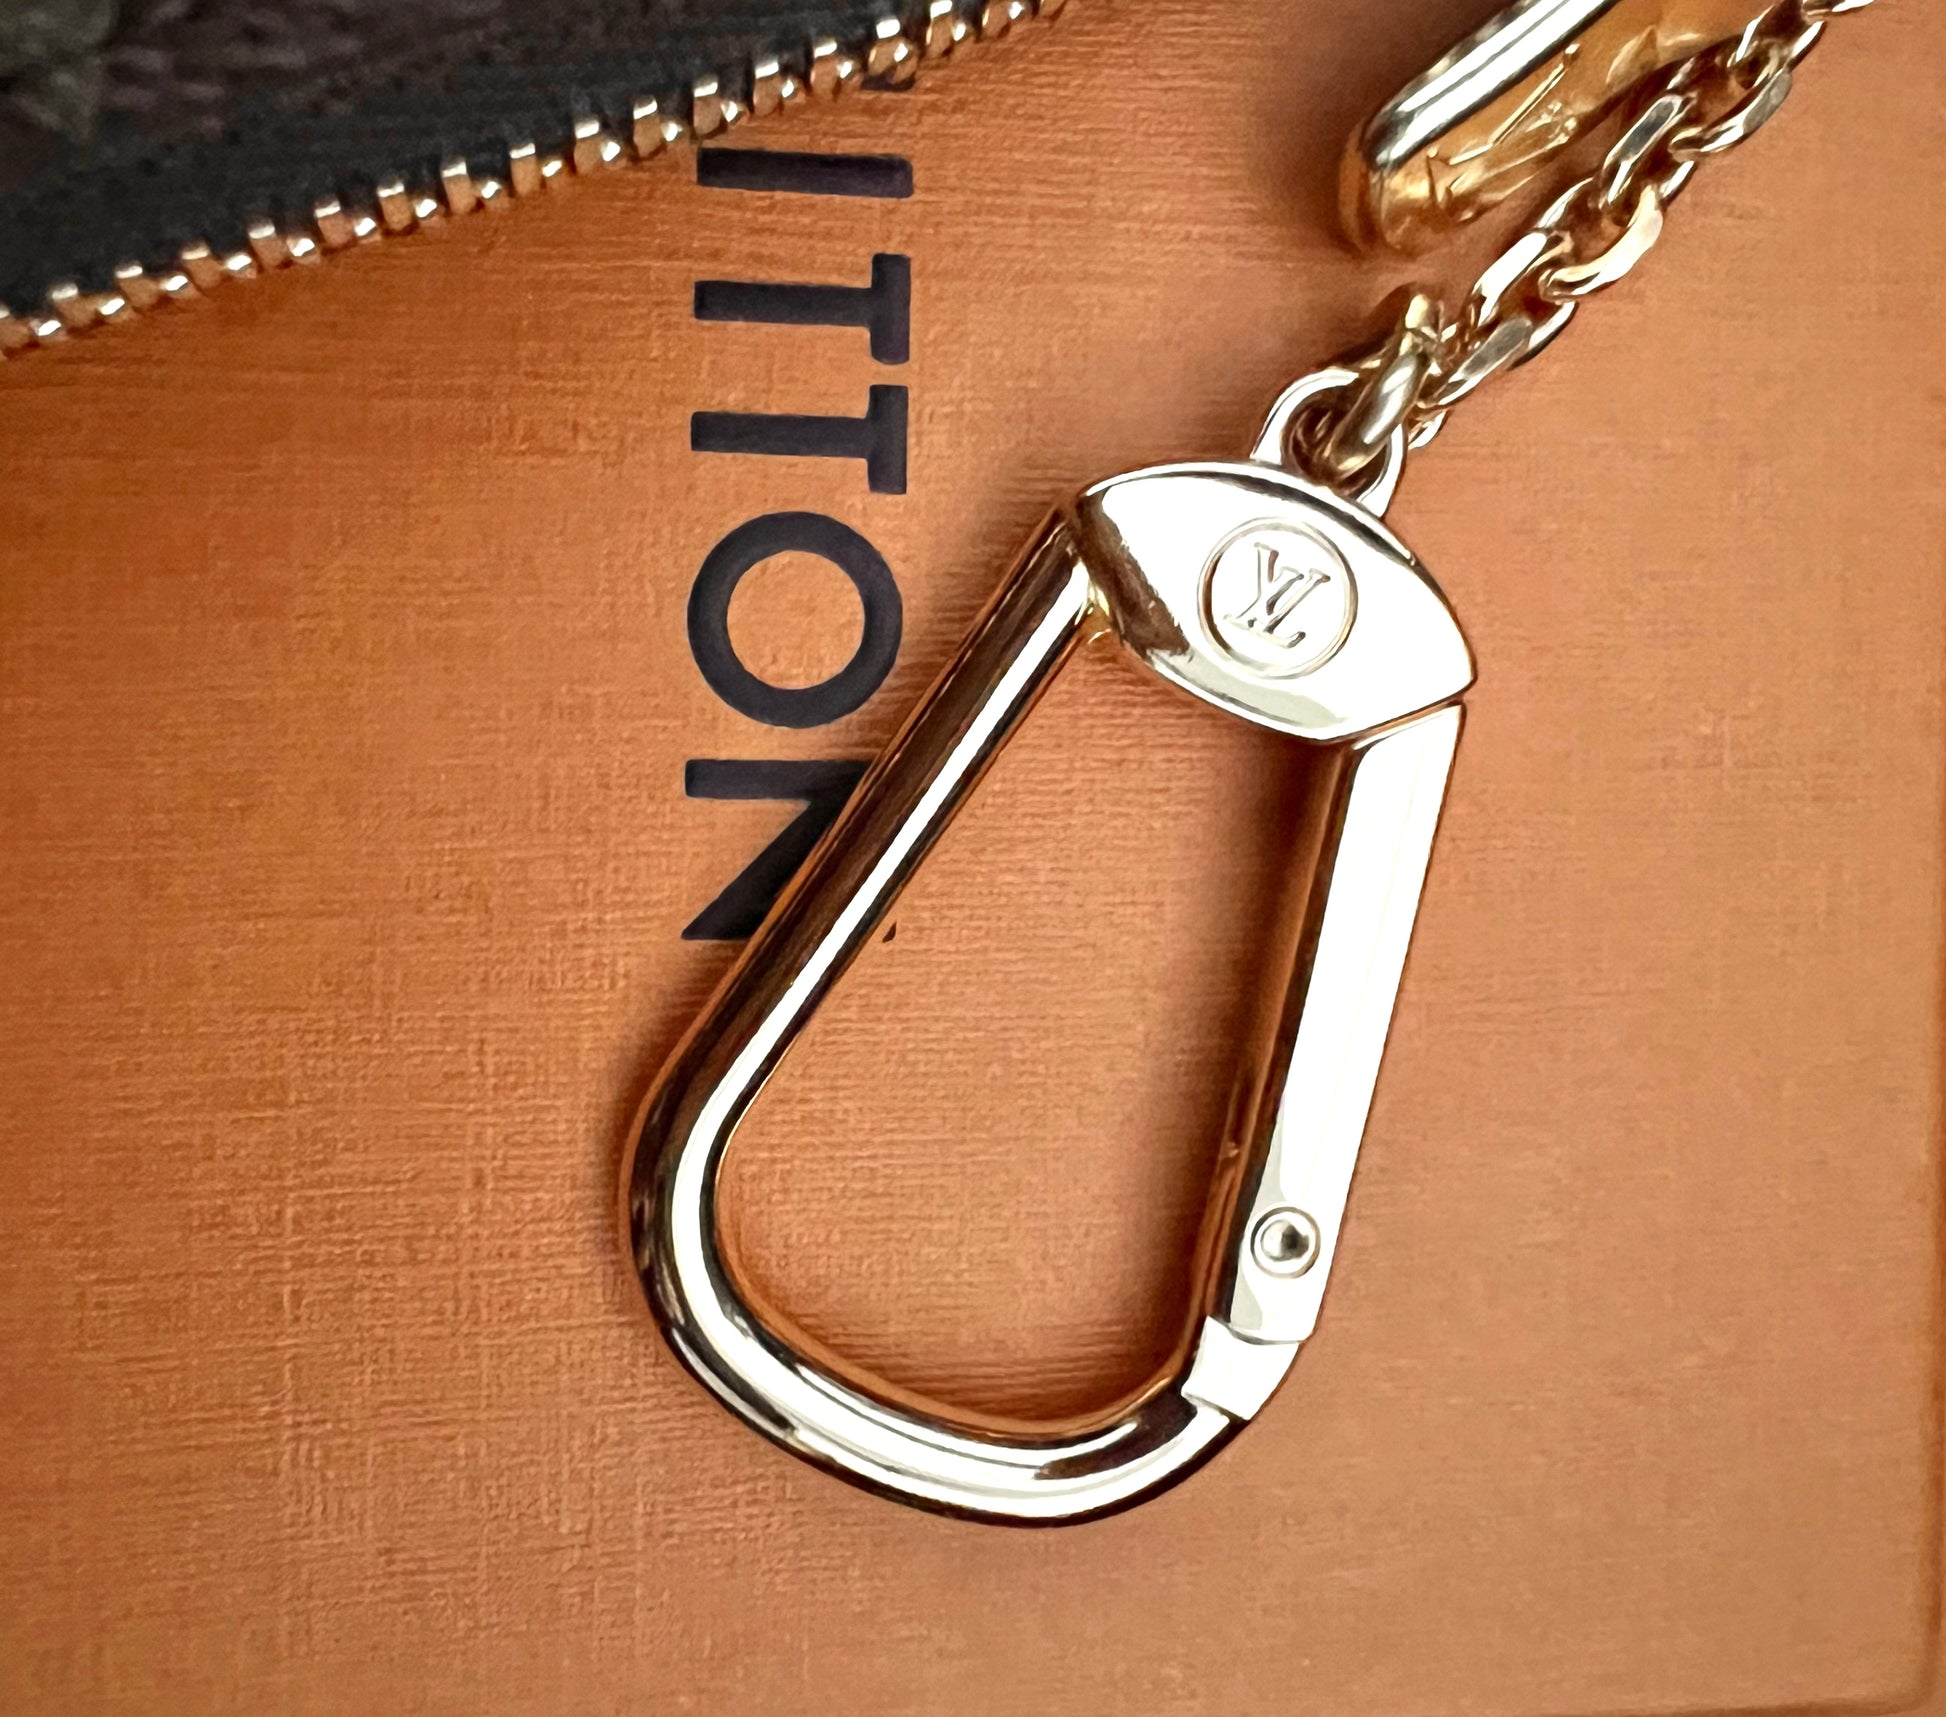 Louis Vuitton Monogram 2020 Christmas Animation Bumper Car Bag Charm